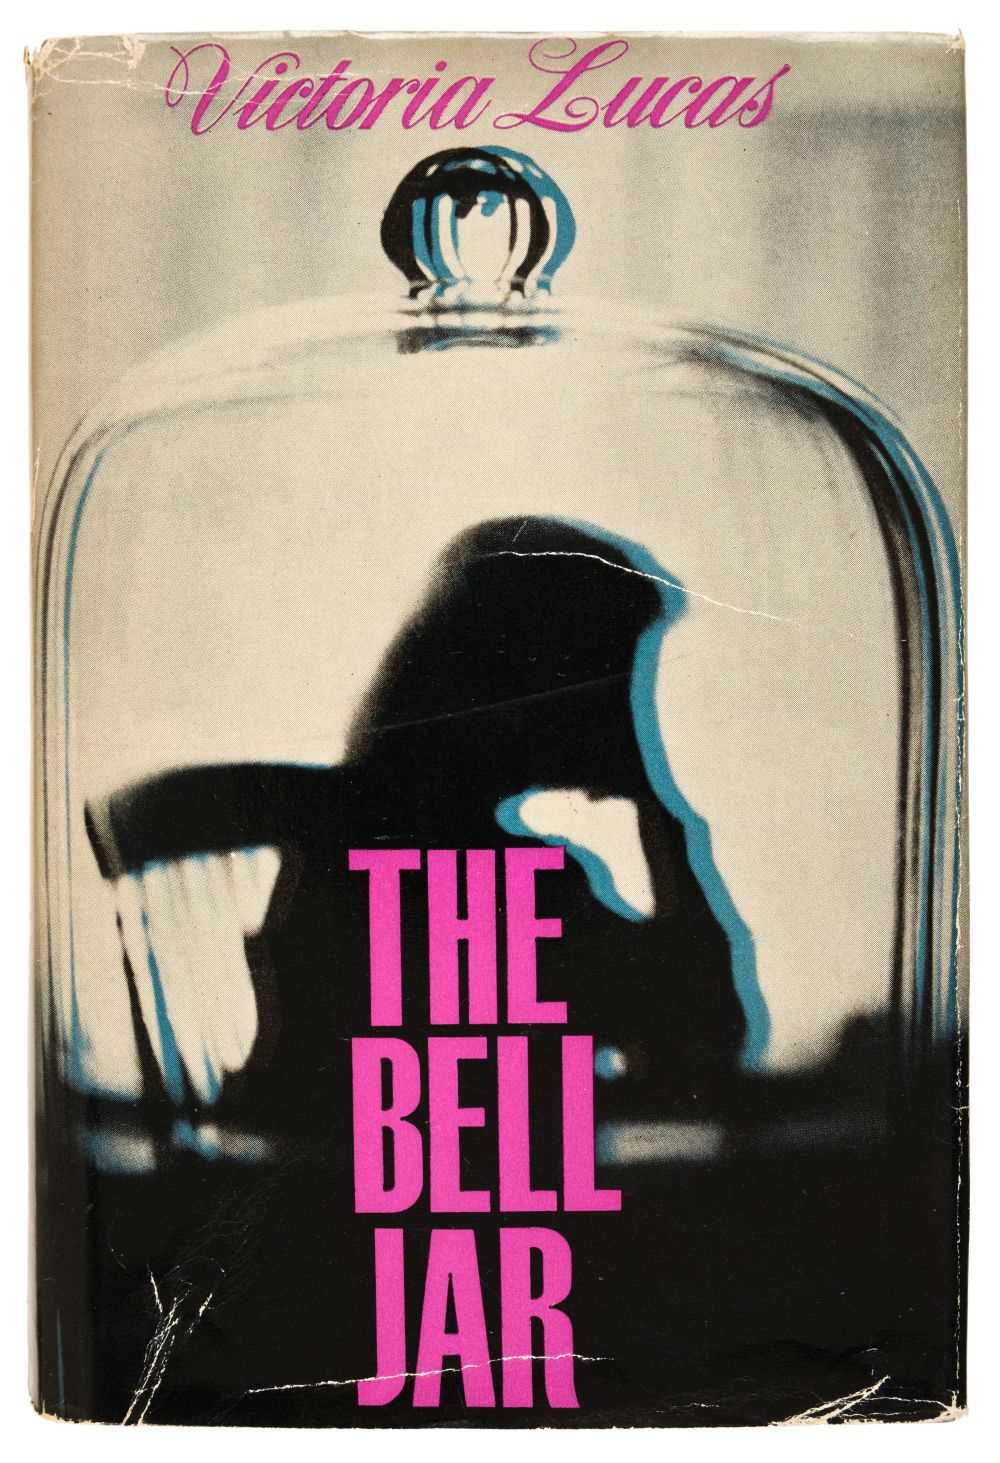 Lot 953 - Plath (Sylvia). The Bell Jar, 1st edition, London: Heinemann, 1963